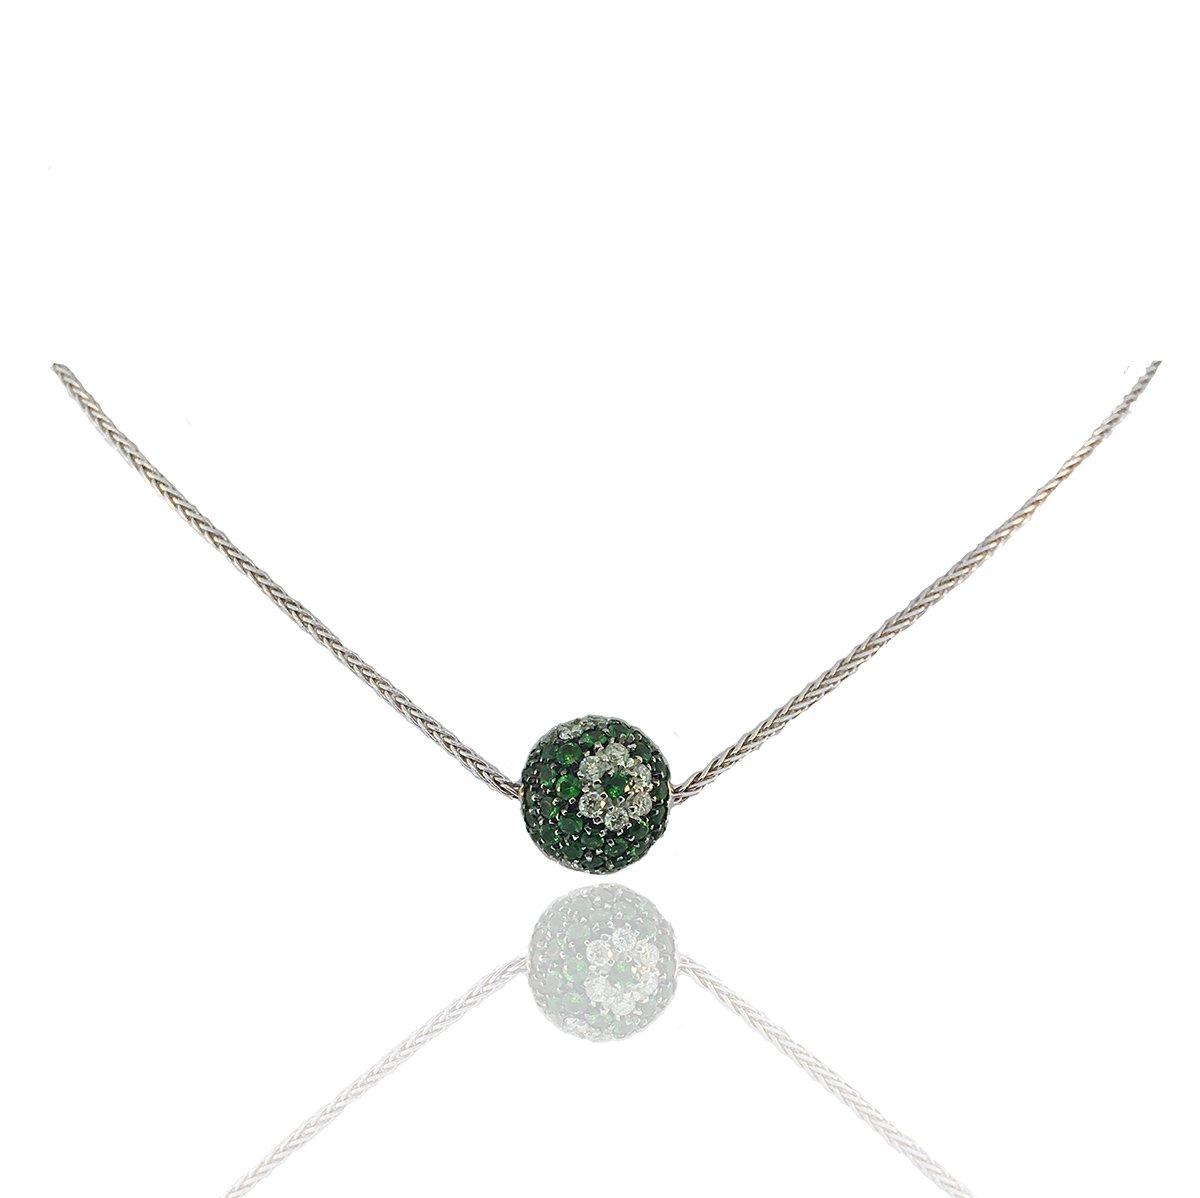 Emerald and diamond necklace, 'Serpenti', 寶格麗, 祖母綠配鑽石「Serpenti」項鏈, Magnificent Jewels and Noble Jewels: Part I, 2021